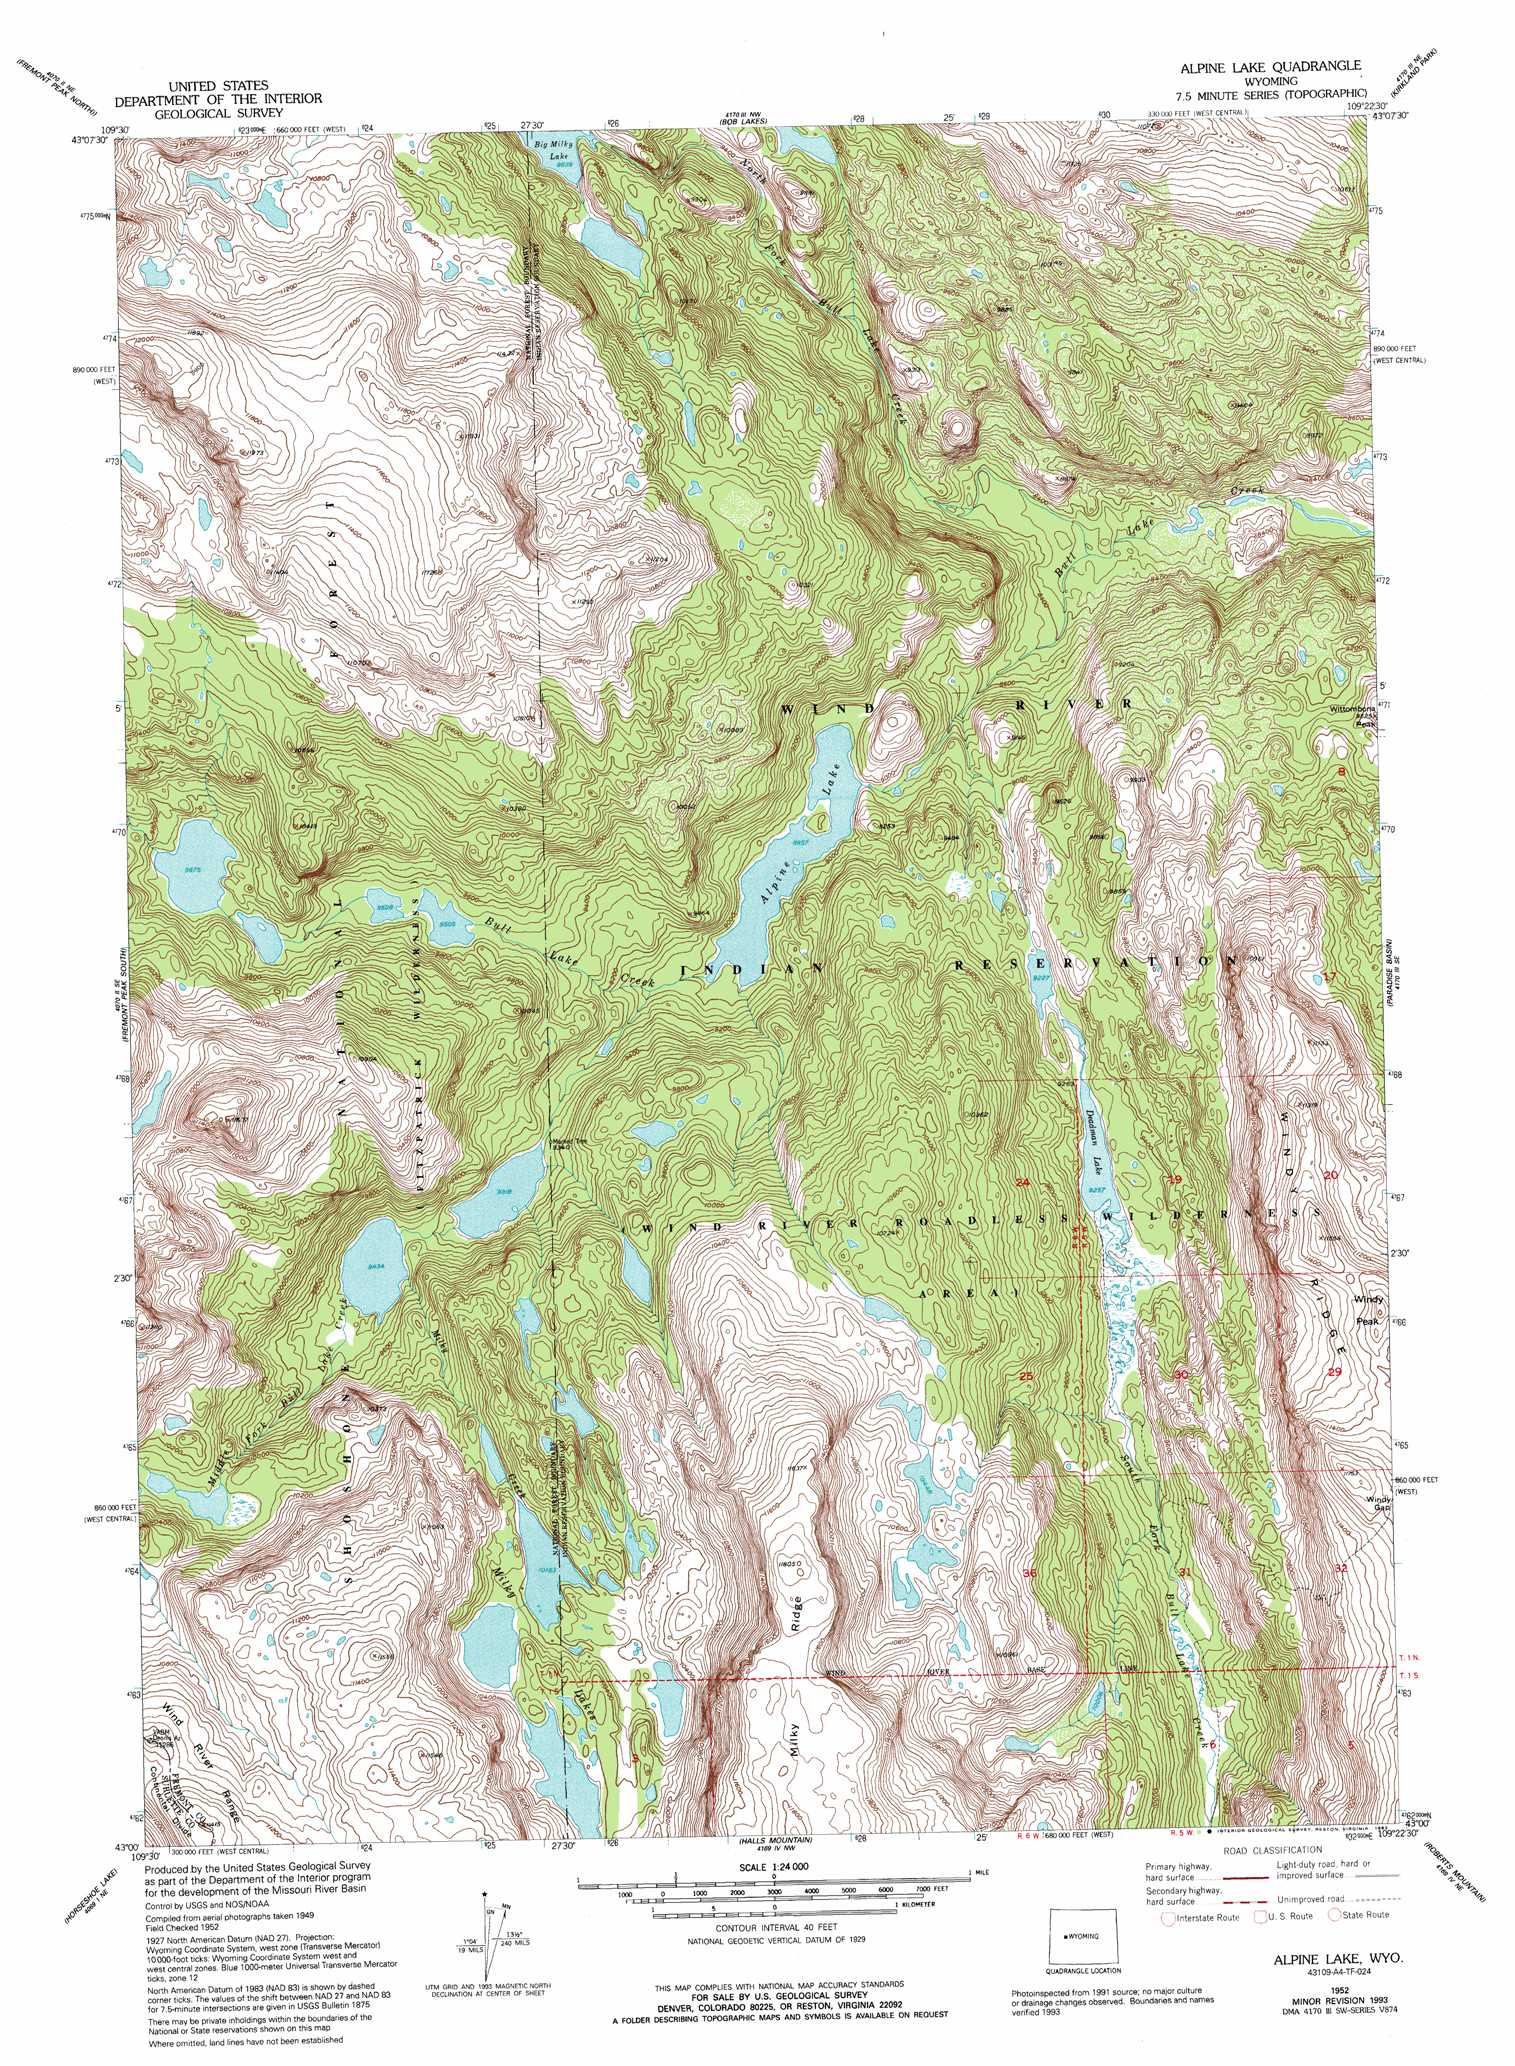 Alpine Lake topographic map, WY - USGS Topo Quad 43109a4